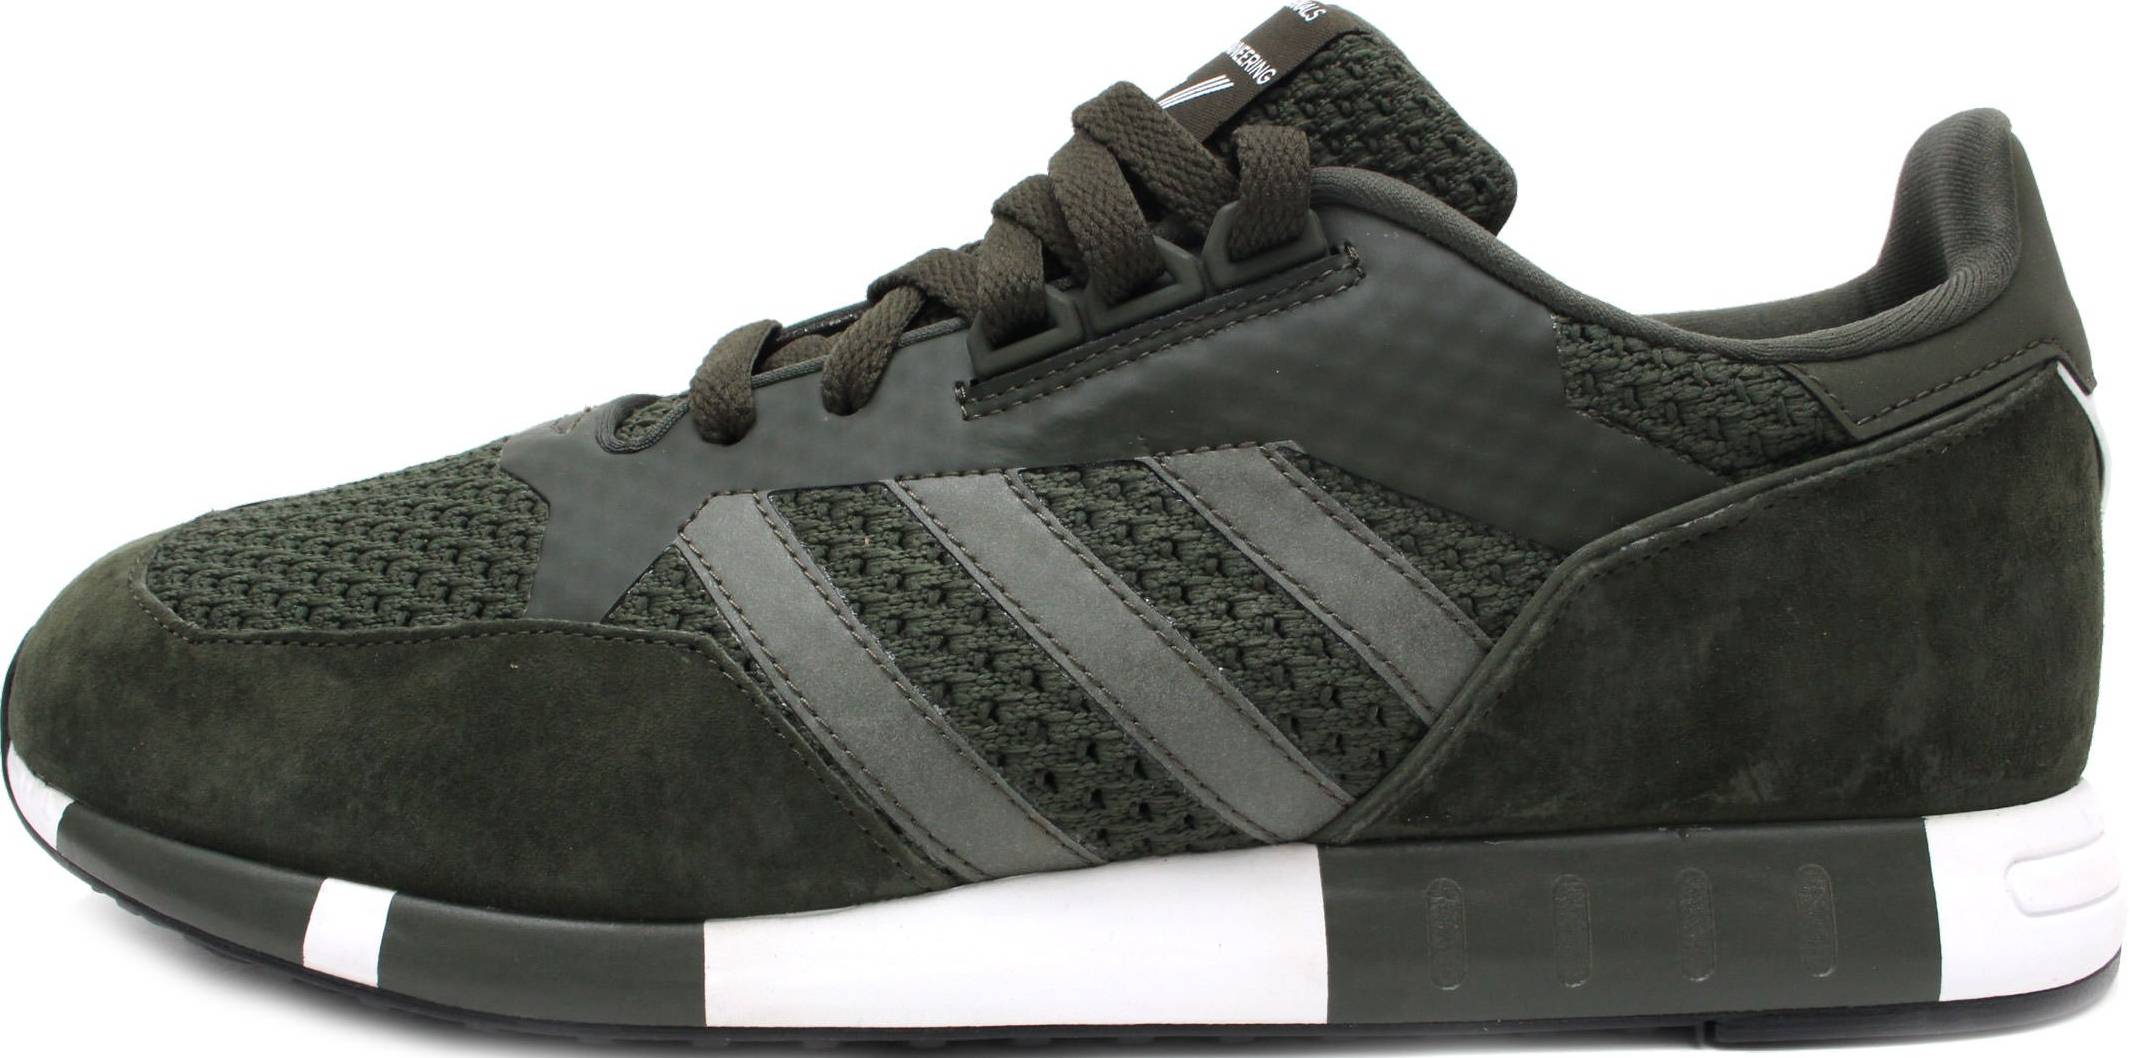 Adidas Boston Super Primeknit sneakers in black + green (only $113) |  RunRepeat